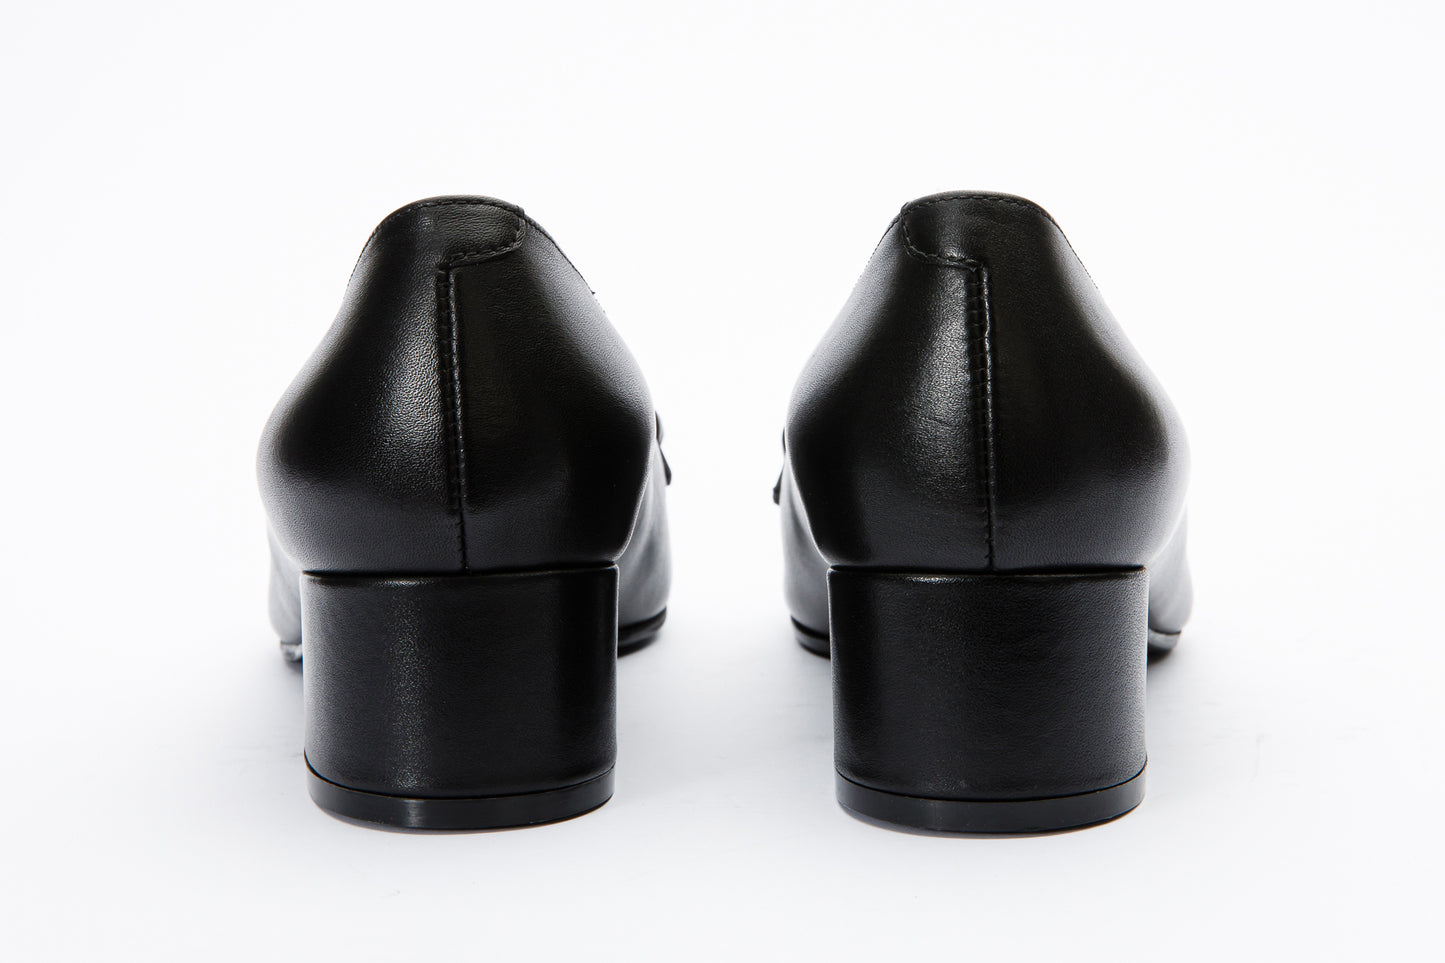 The Delhi Black Leather Block Heel Pump Women Shoe